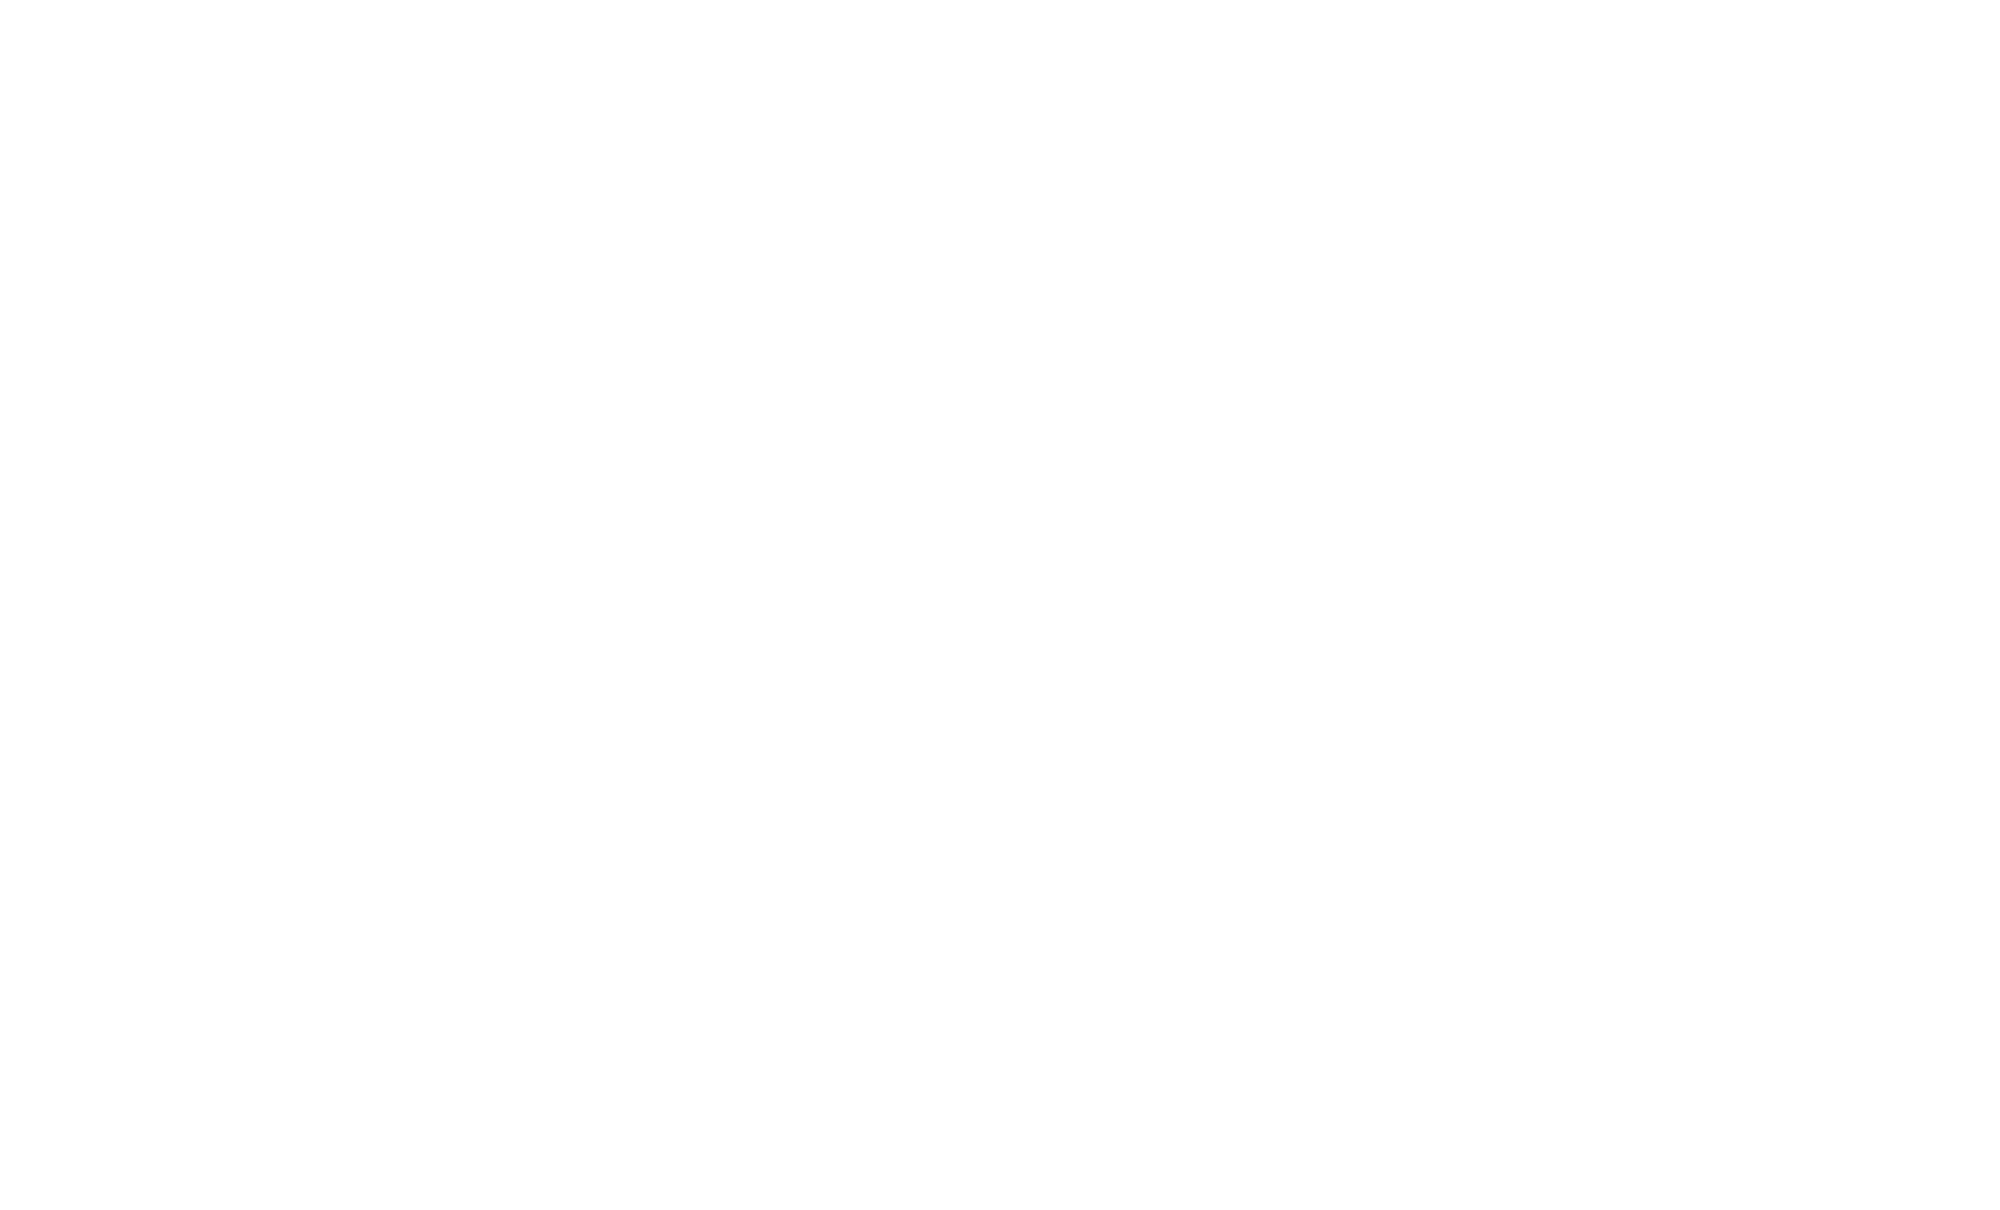 Logo_142036_Heritage_VER_W_MO